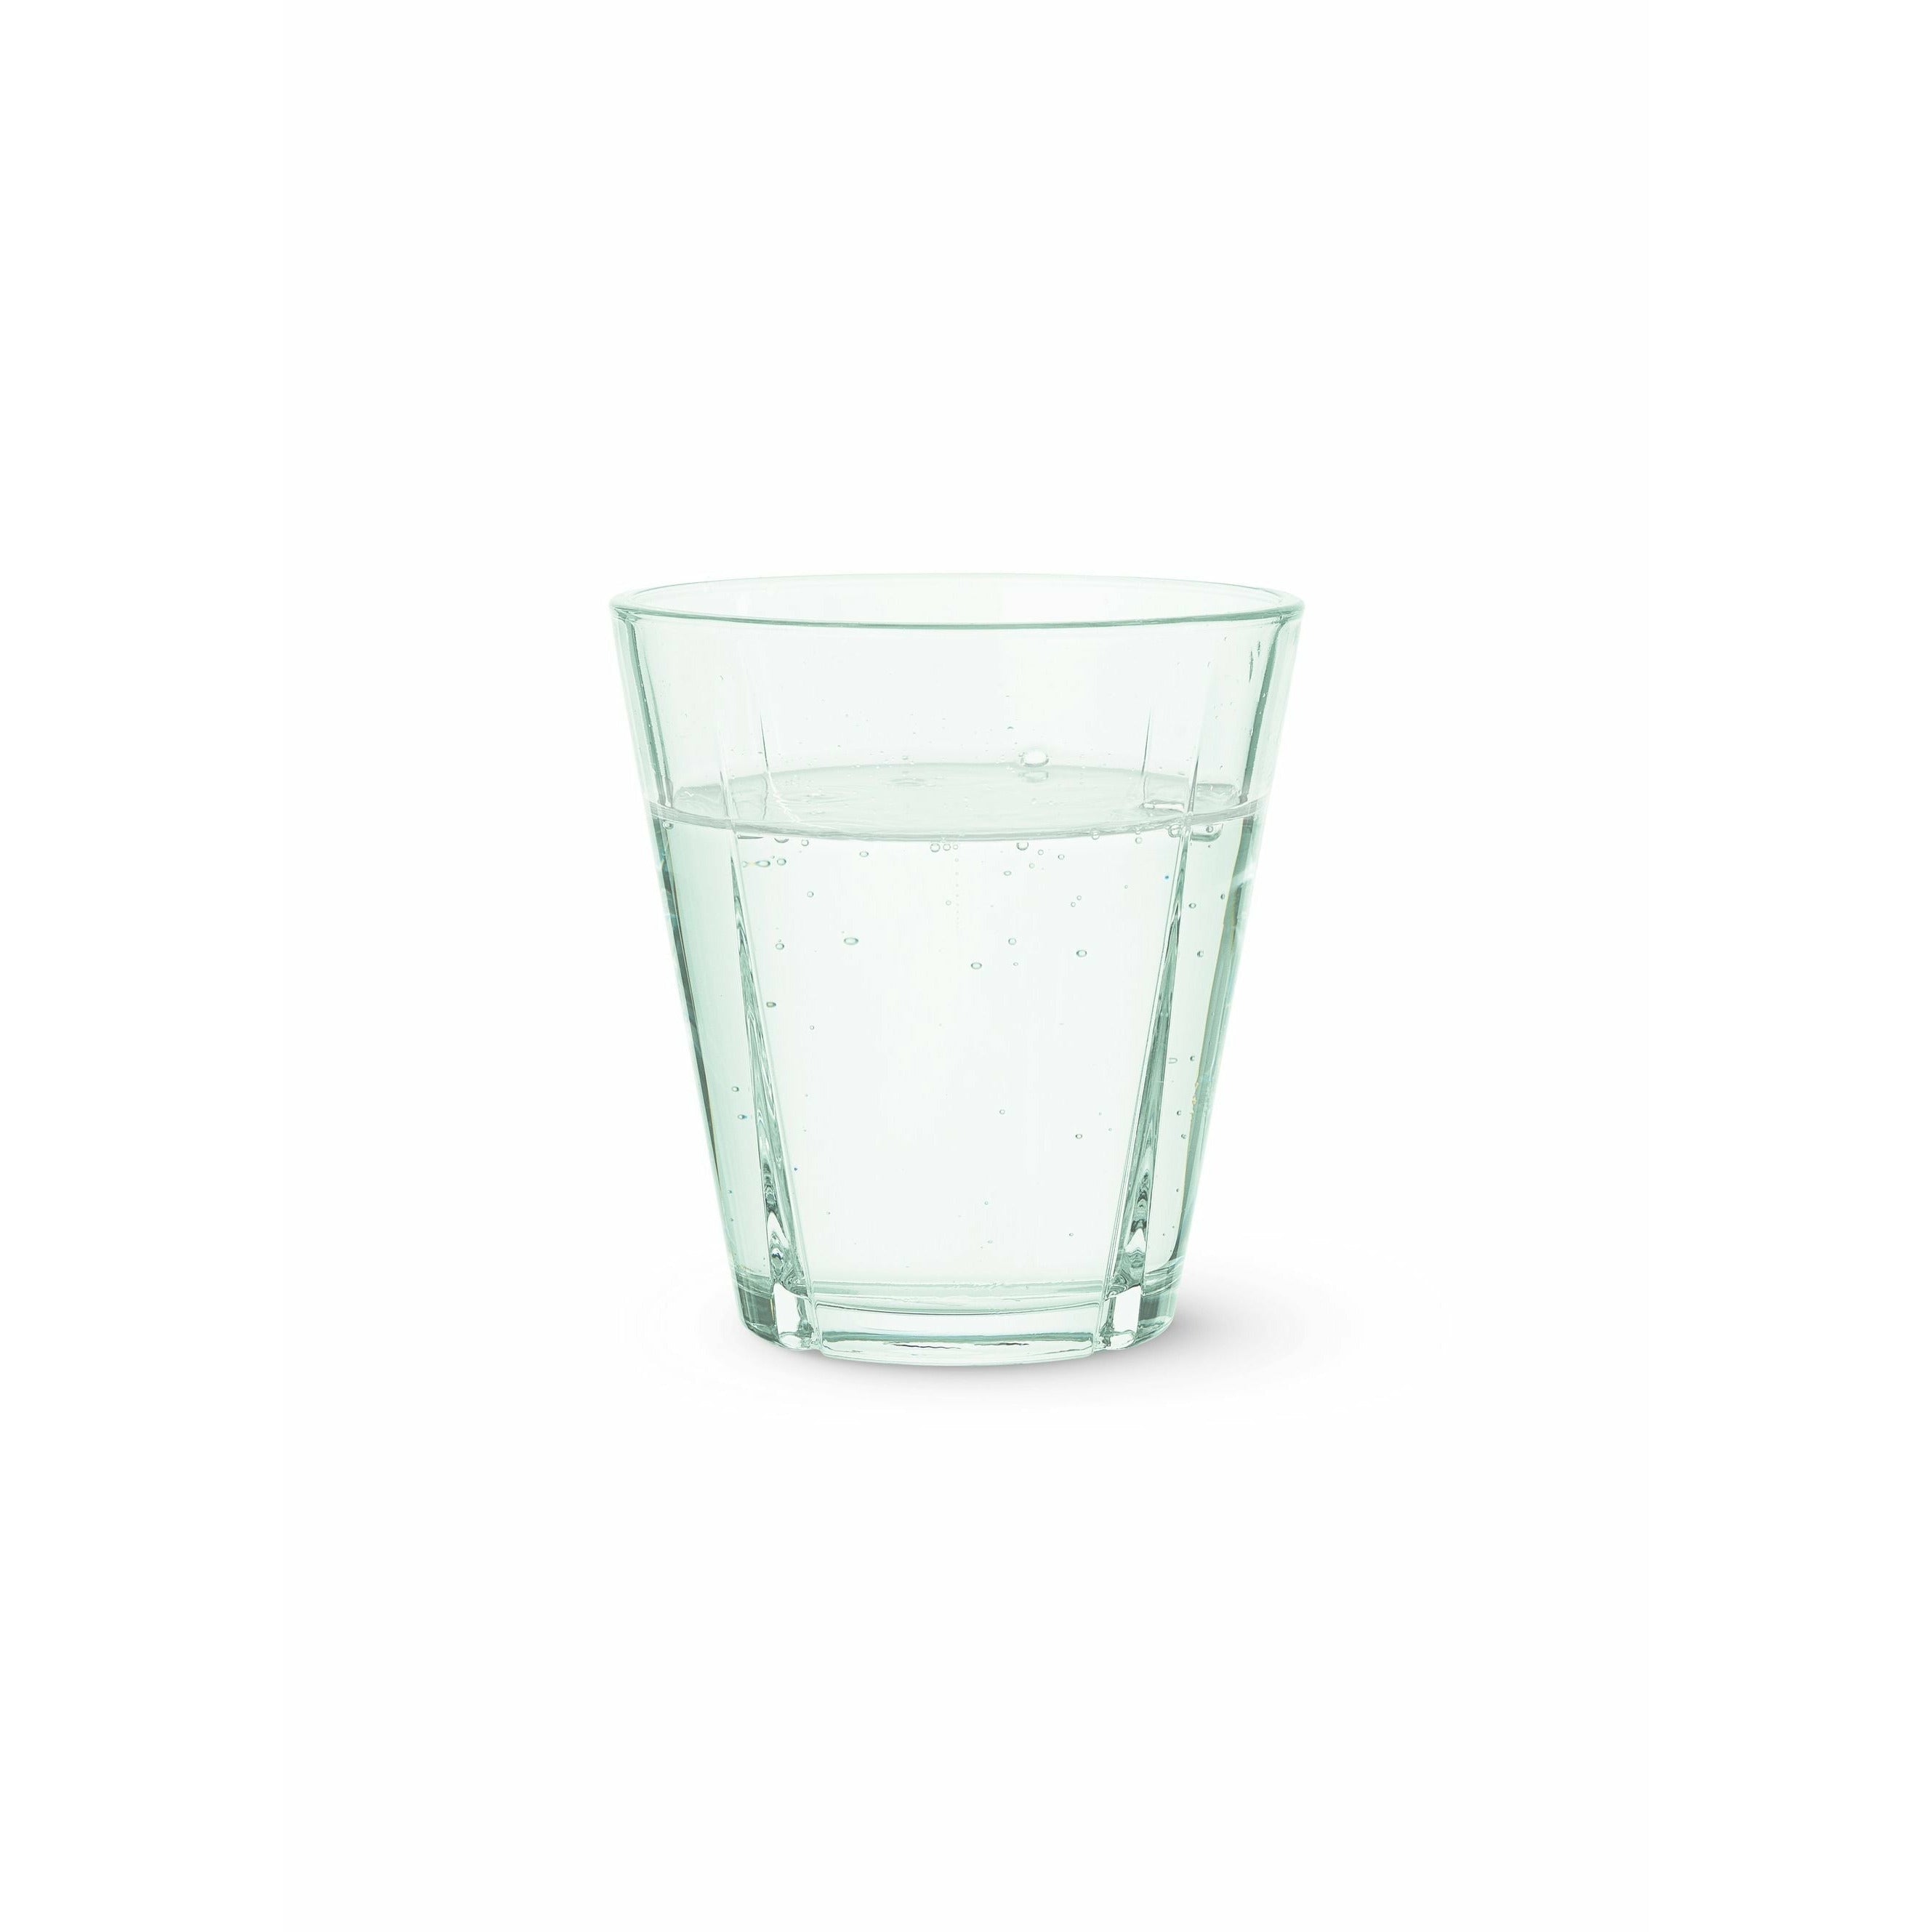 Rosendahl Grand Cru Trinkglas recyceltes Glas 26 Cl, 4 Stcs.